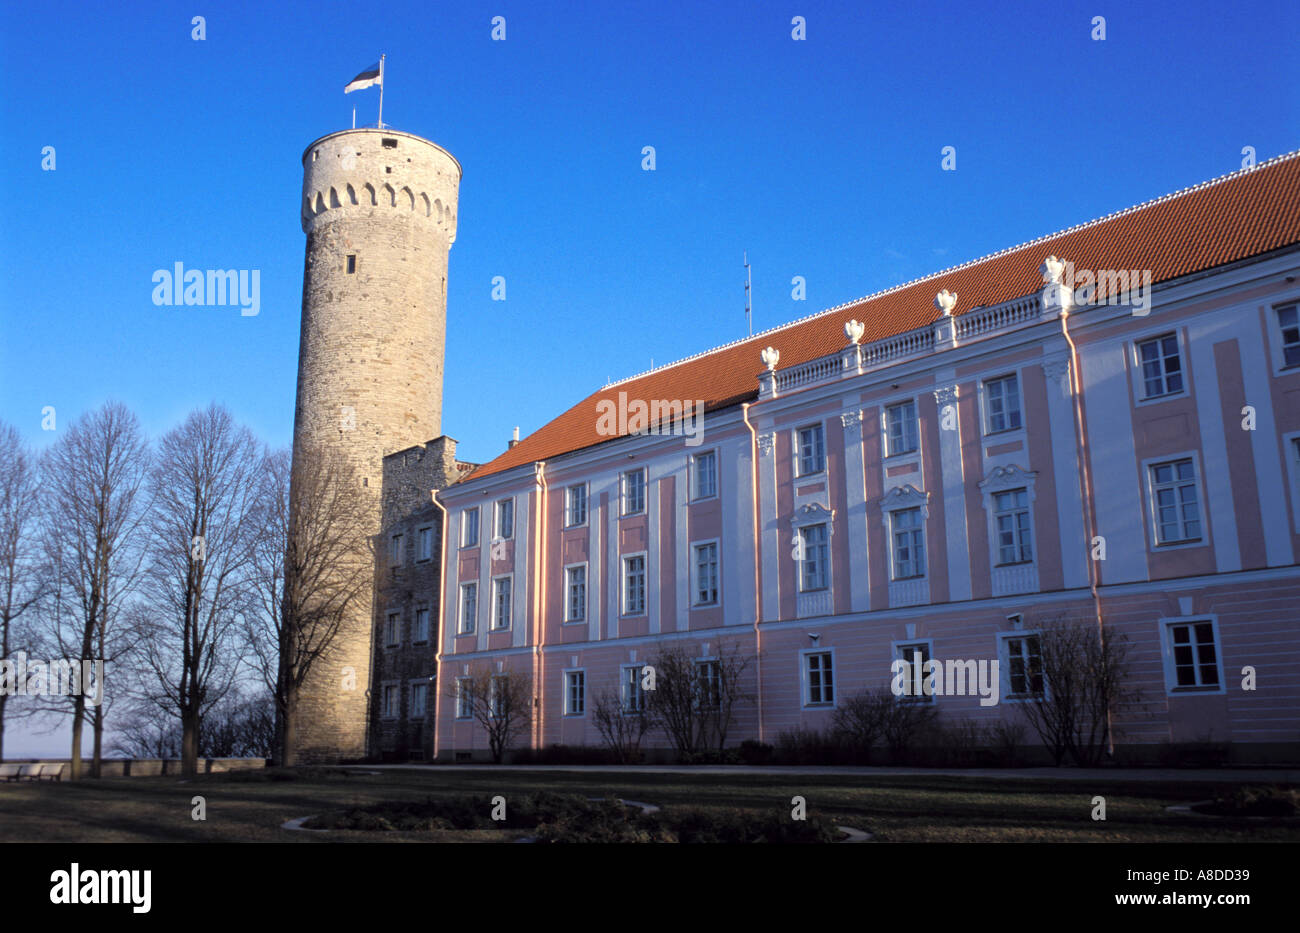 Lungo la torre Herman a Tallinn Estonia Foto Stock